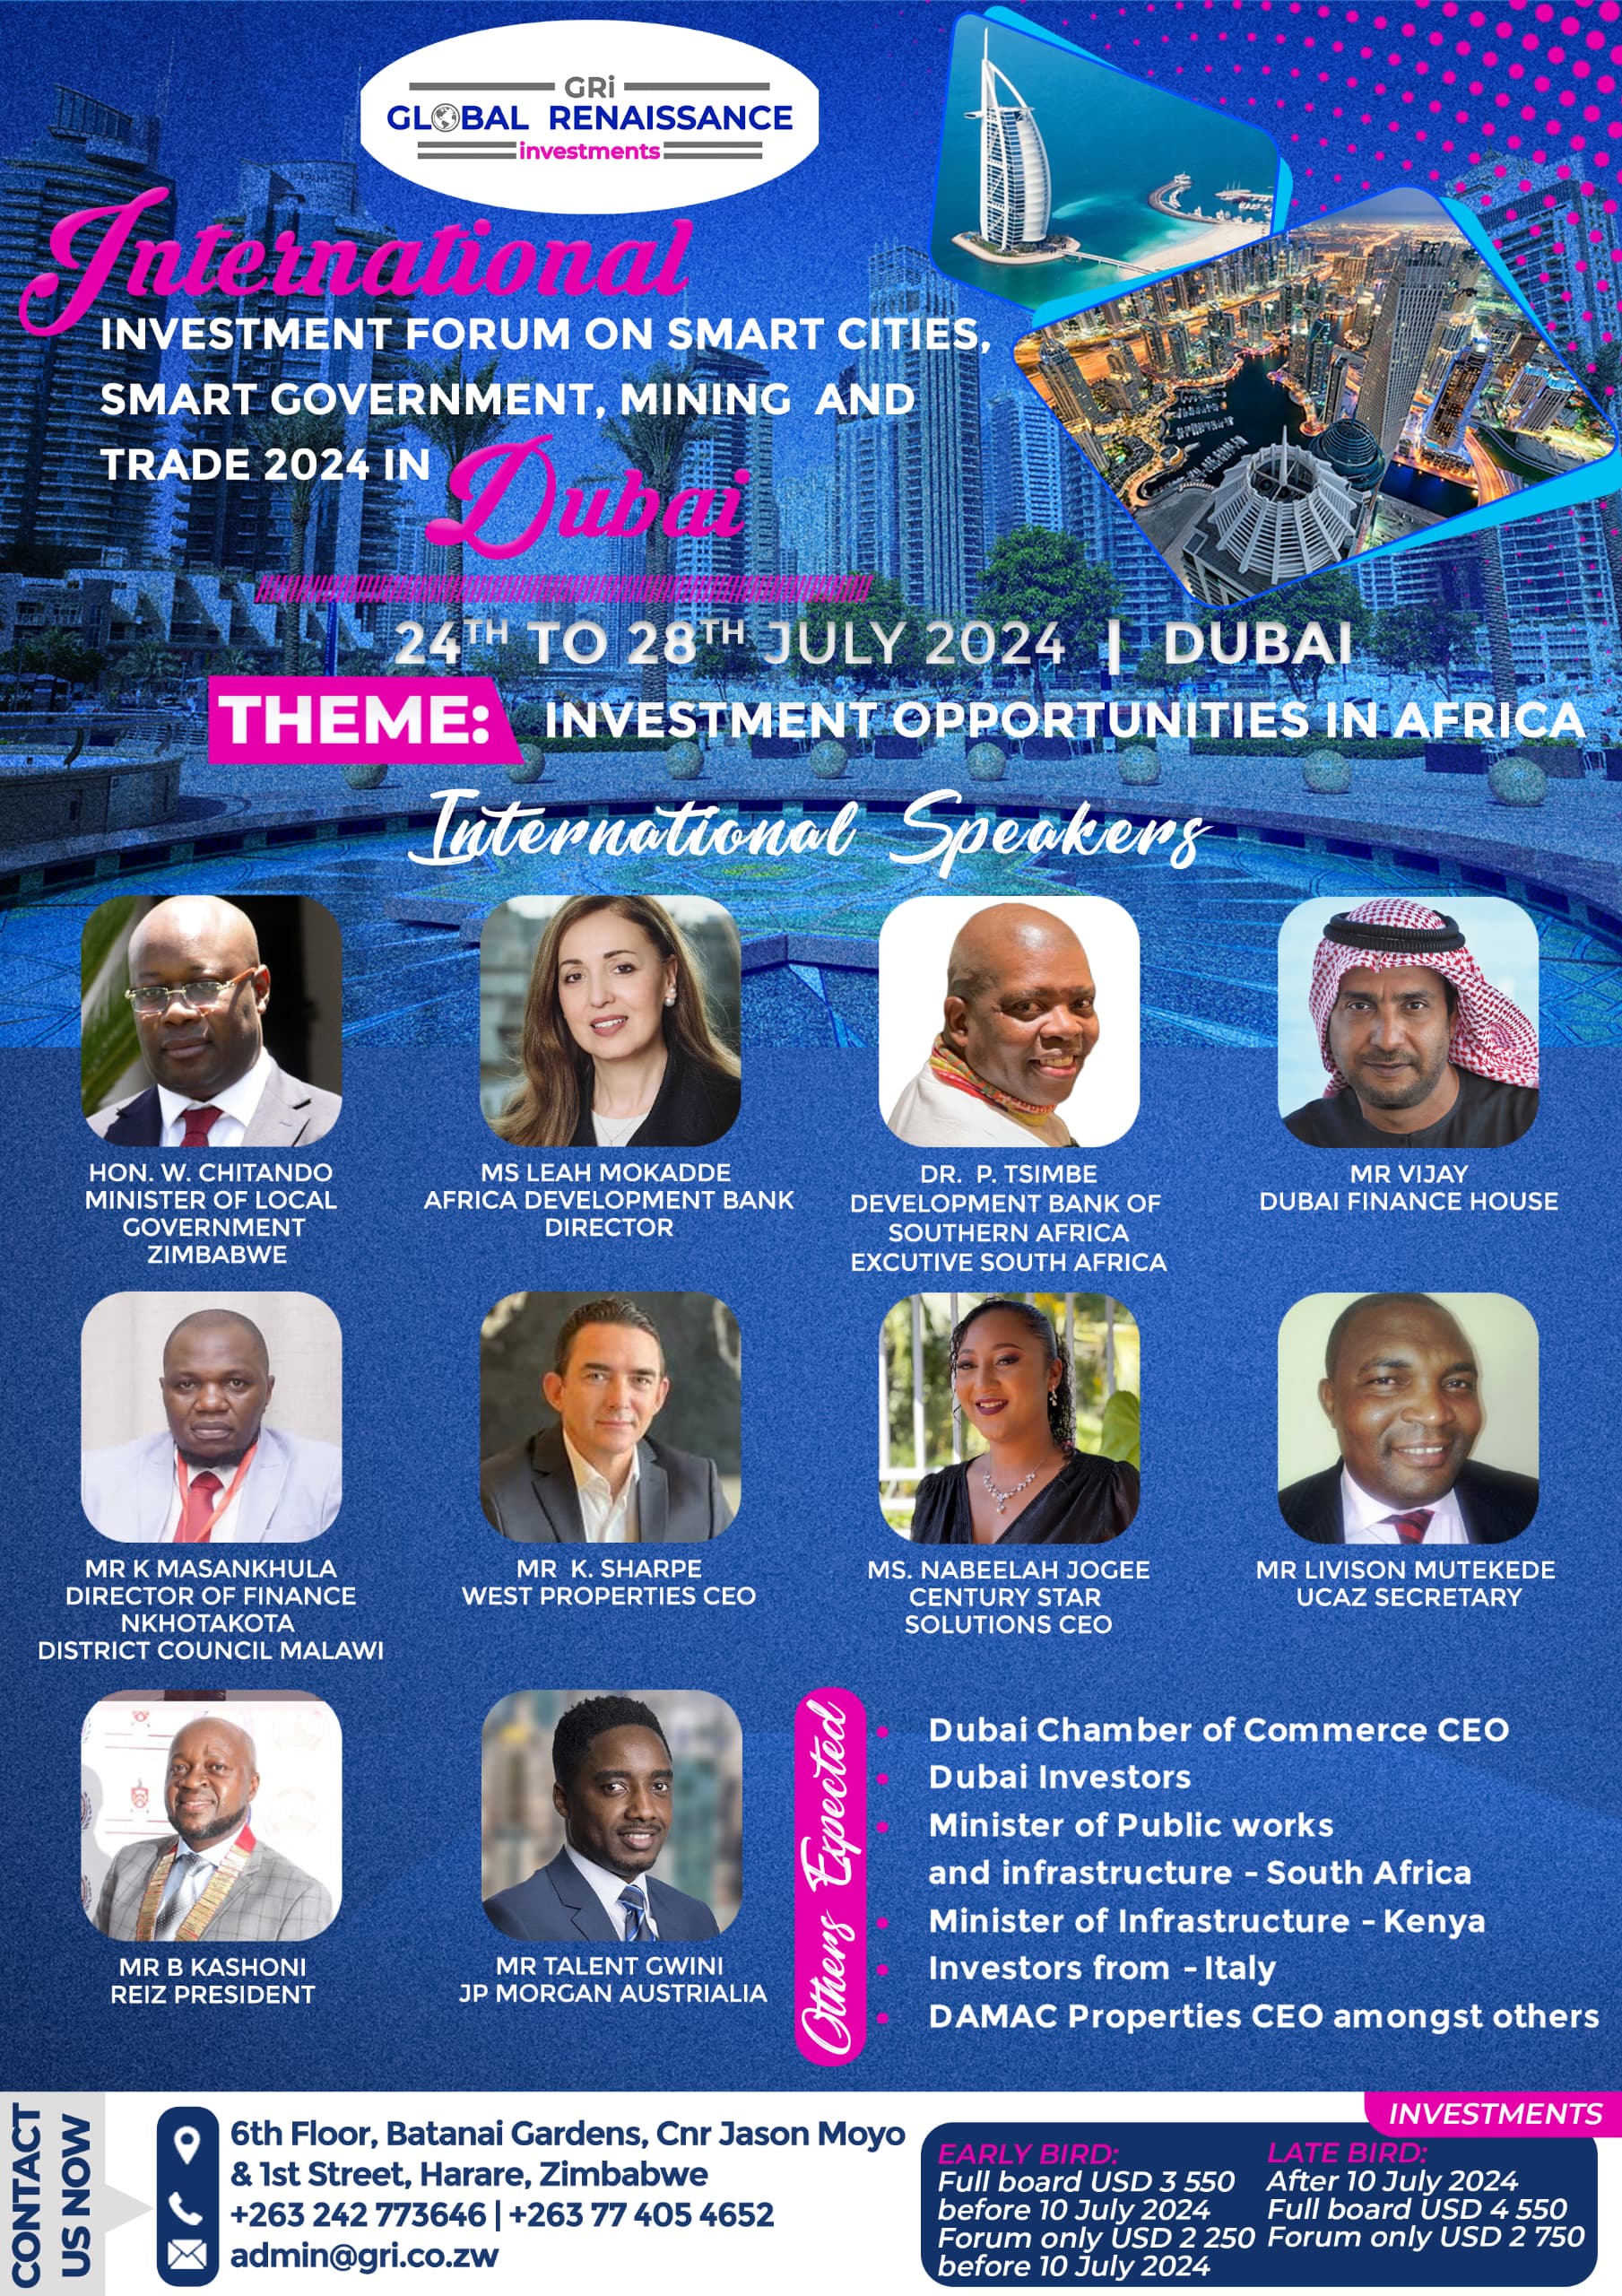 GRI to host landmark International Investment Forum in Dubai